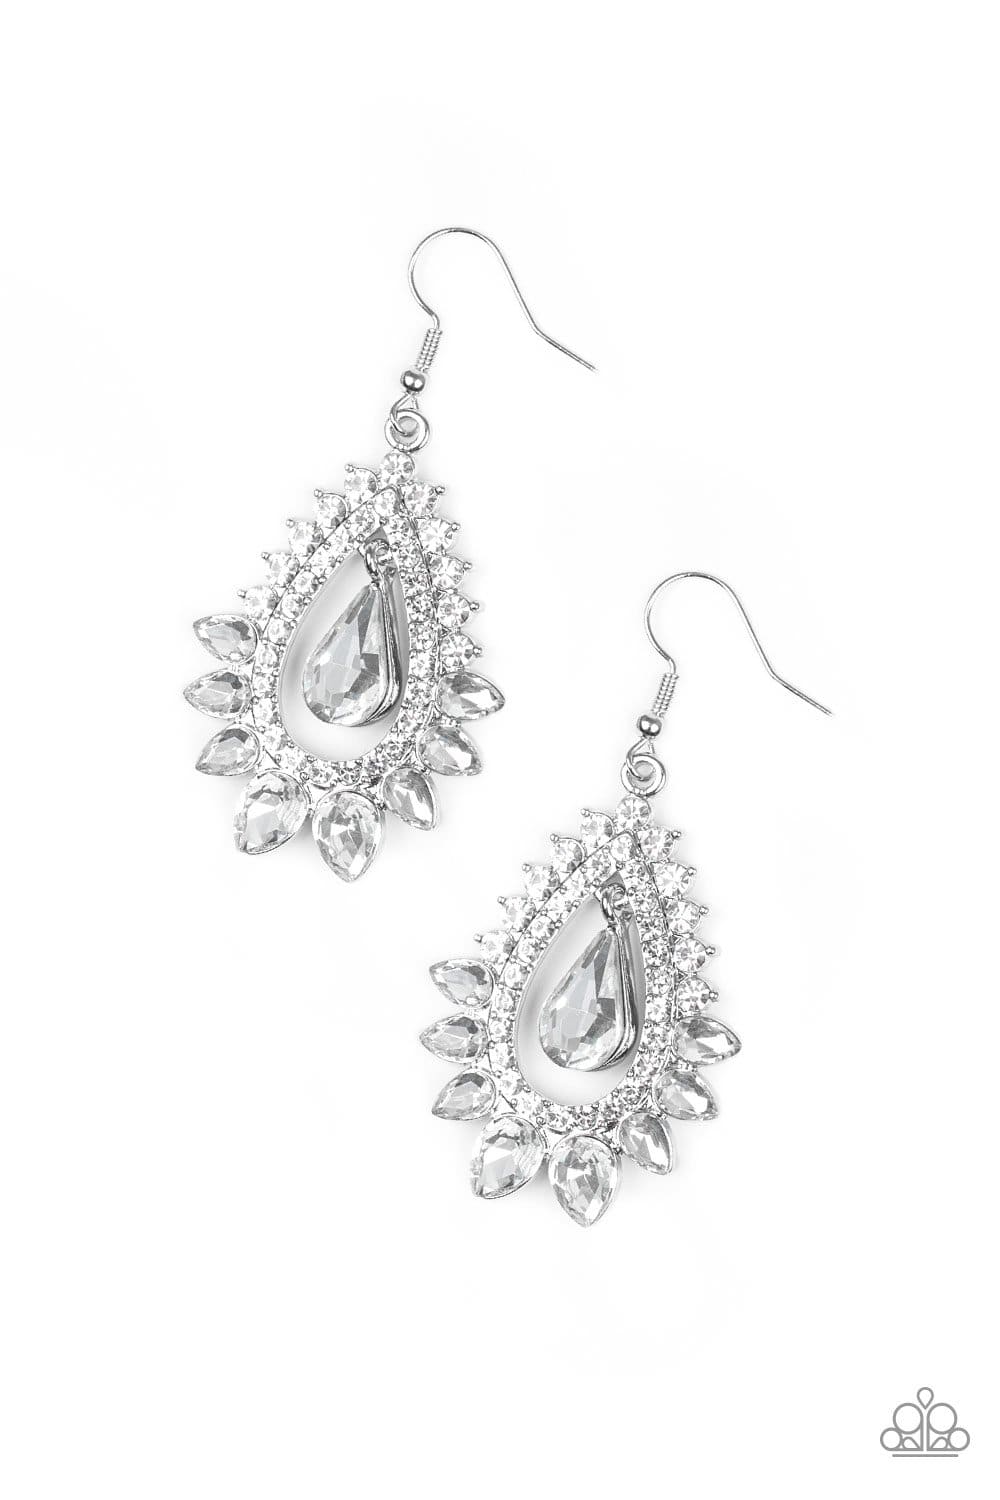 Boss Brilliance - White Rhinestone Earrings - Paparazzi Accessories - GlaMarous Titi Jewels